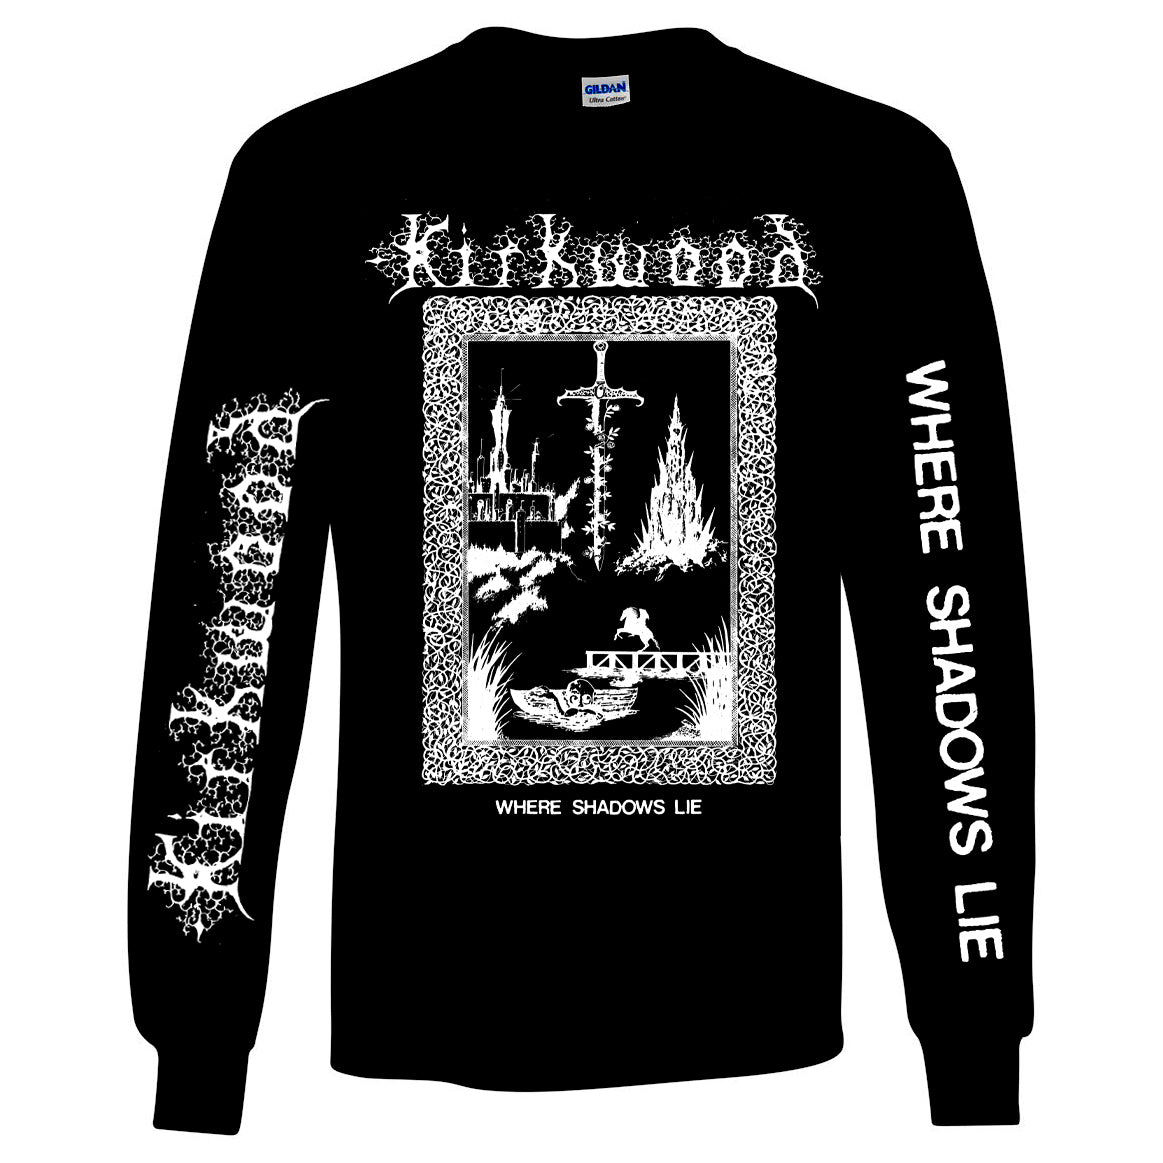 JIM KIRKWOOD "Where Shadows Lie" Long Sleeve Shirt [WHITE or BLACK]